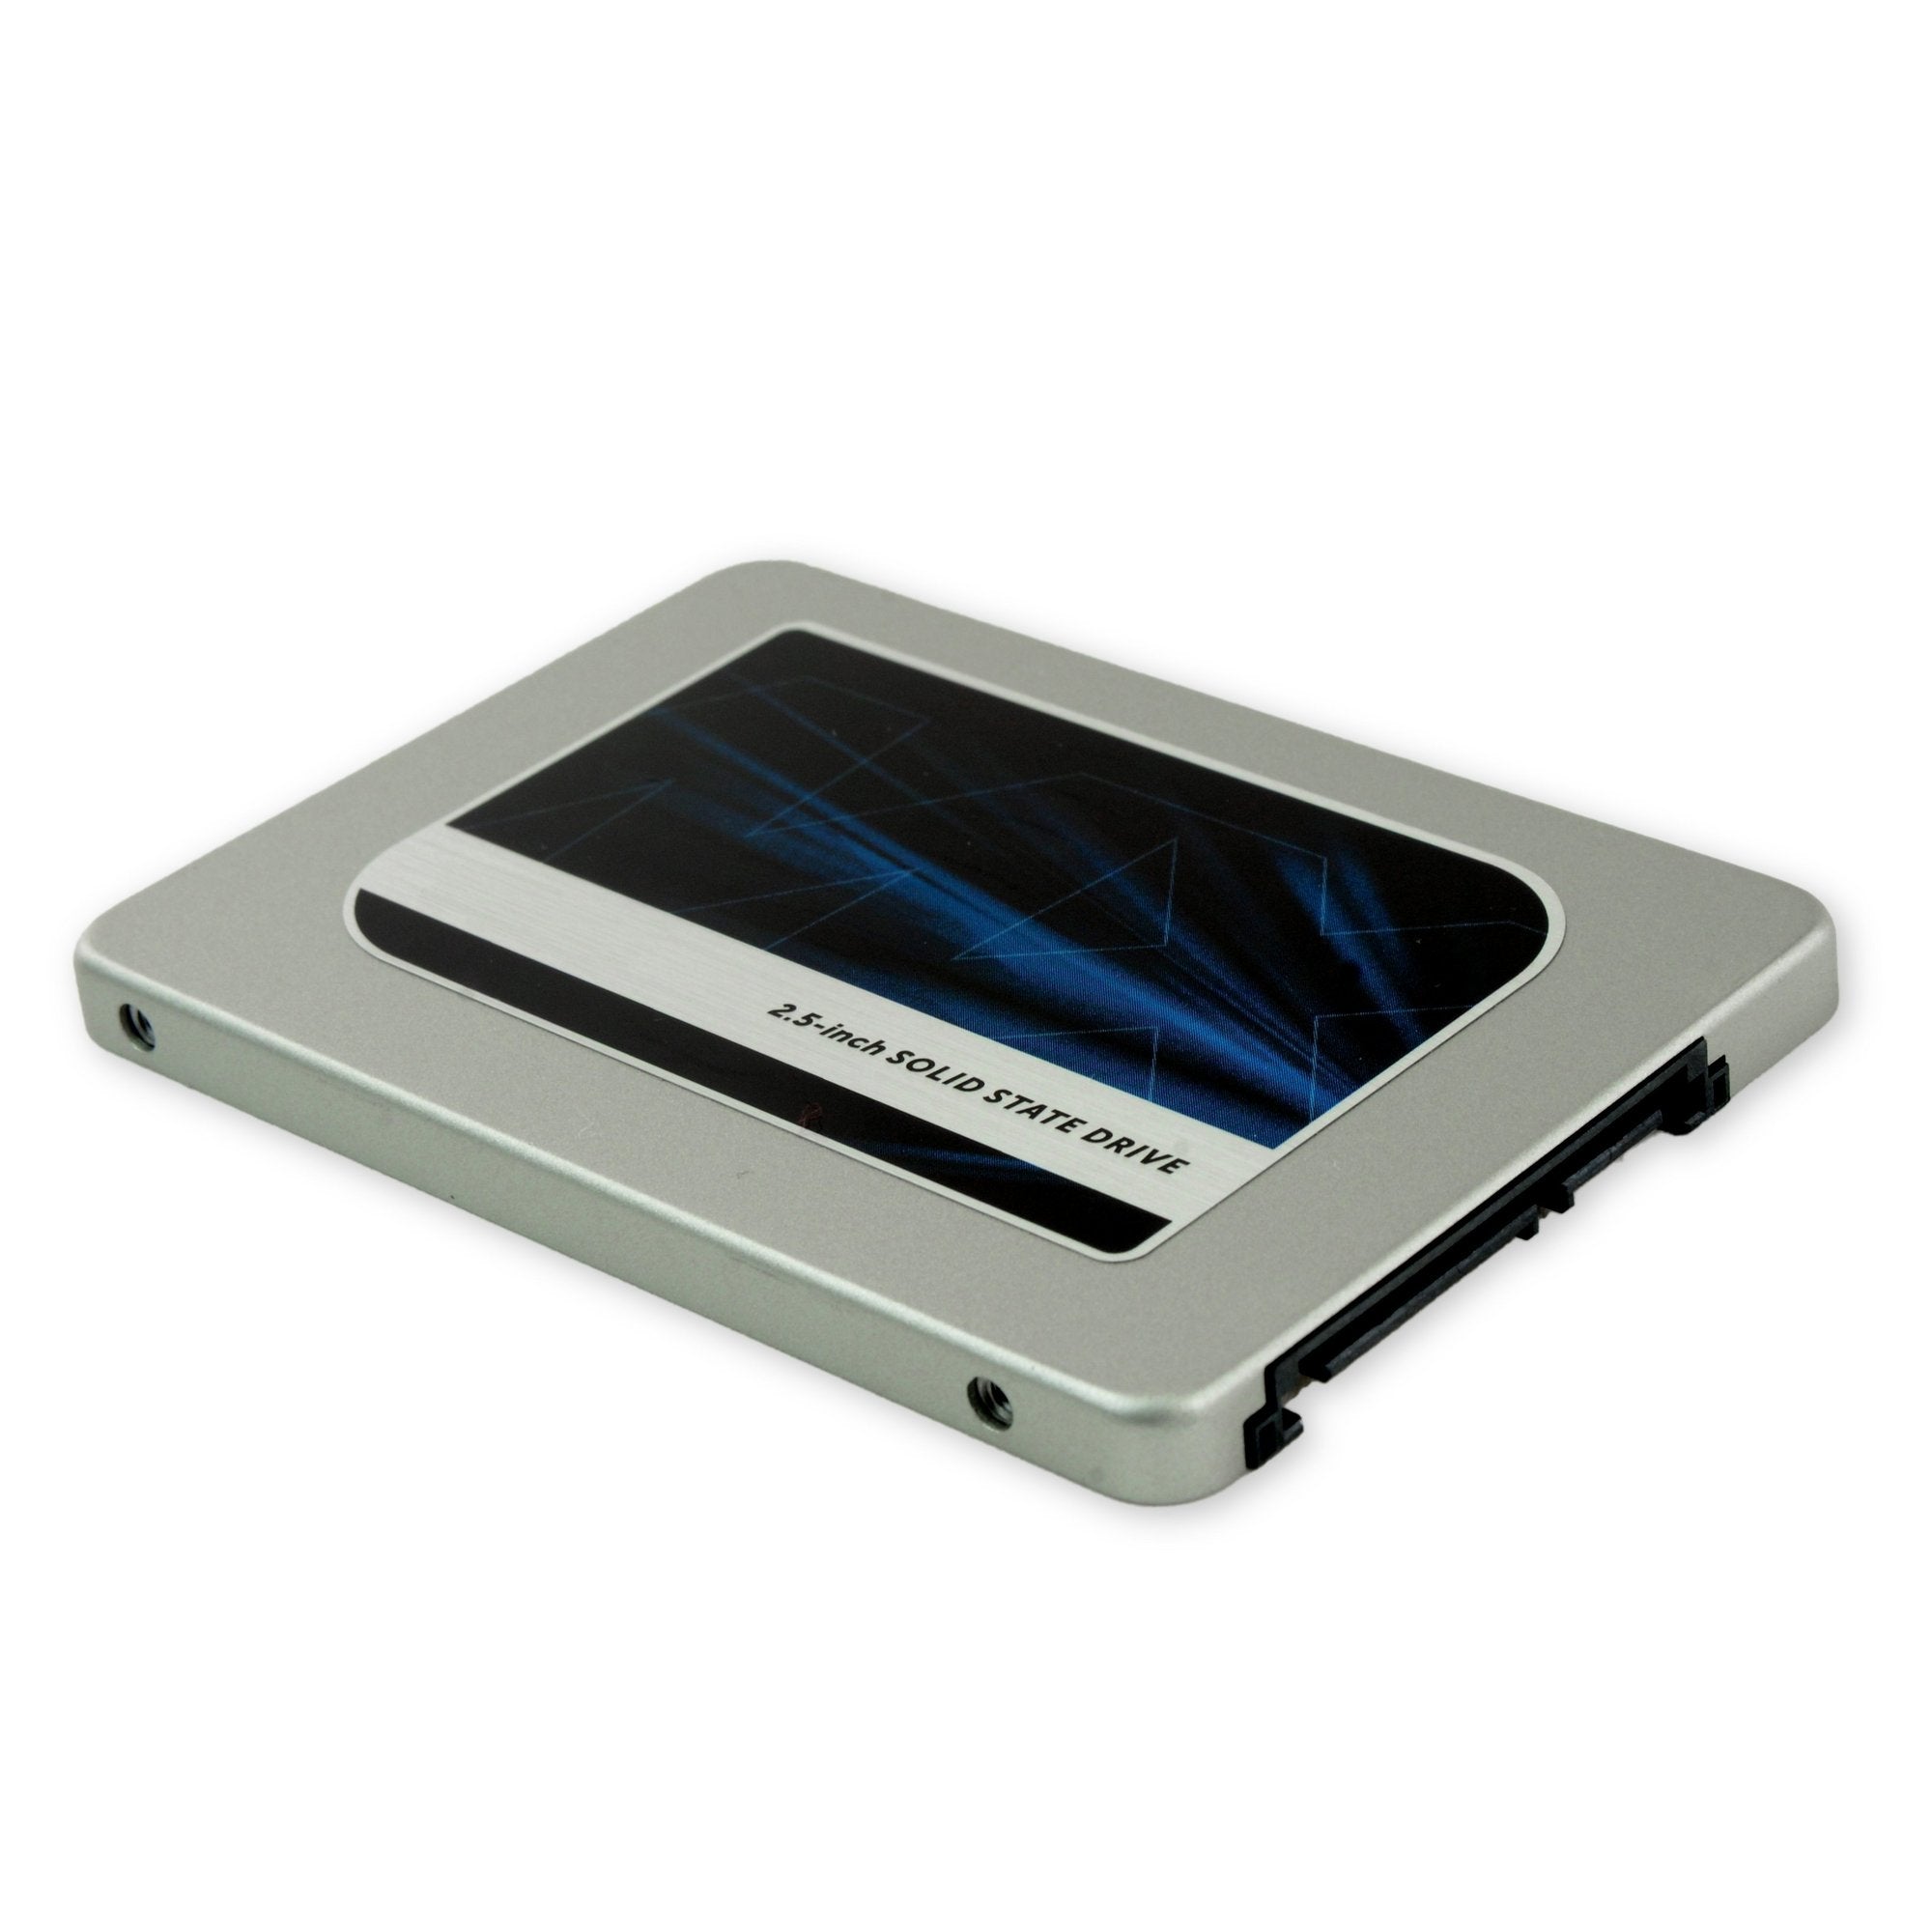 Crucial MX500 - SSD - 4 To - SATA 6Gb/s (CT4000MX500SSD1)